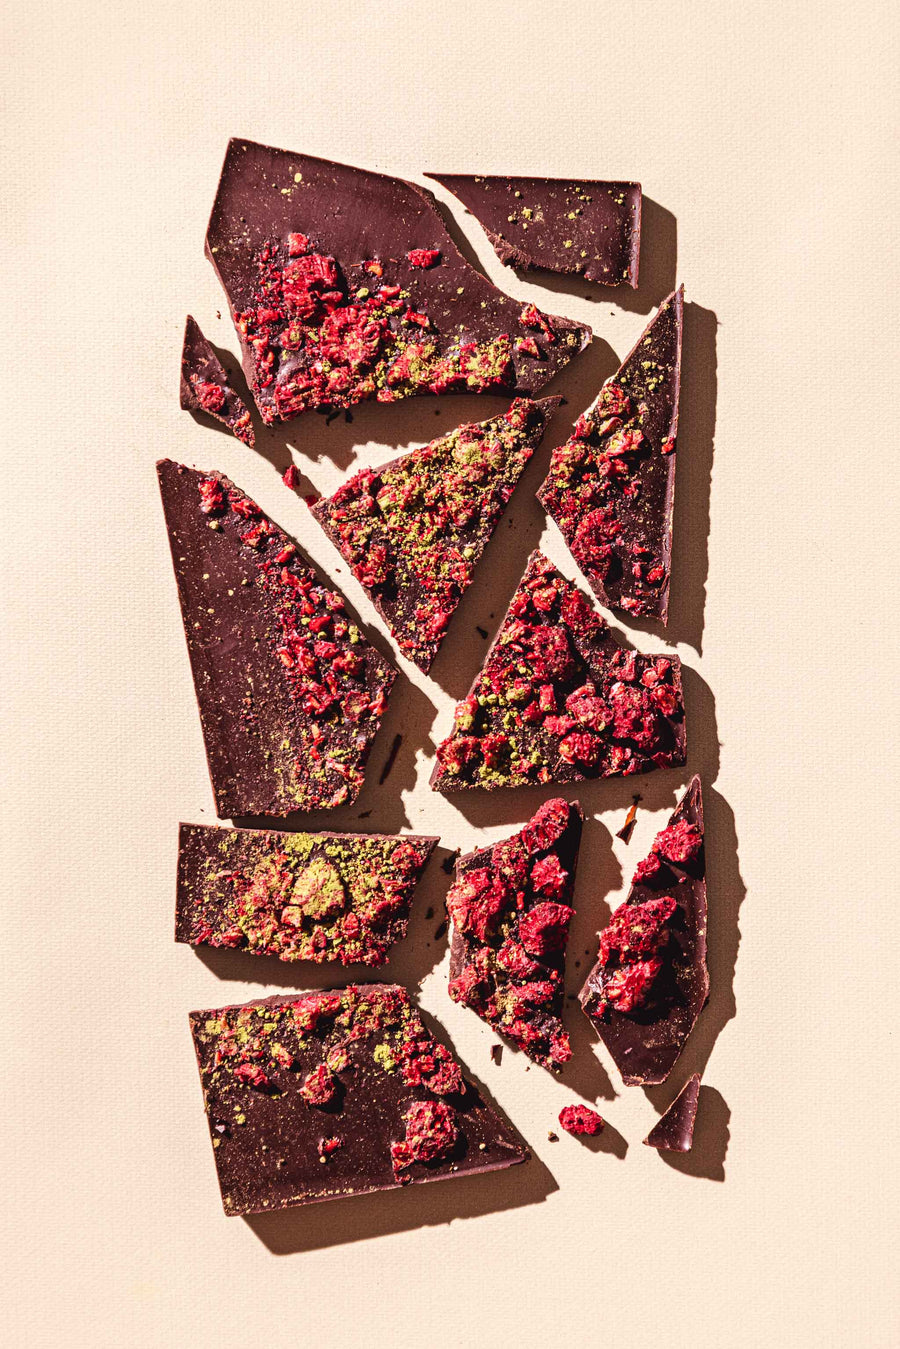 vegan raspberry reishi chocolate bar